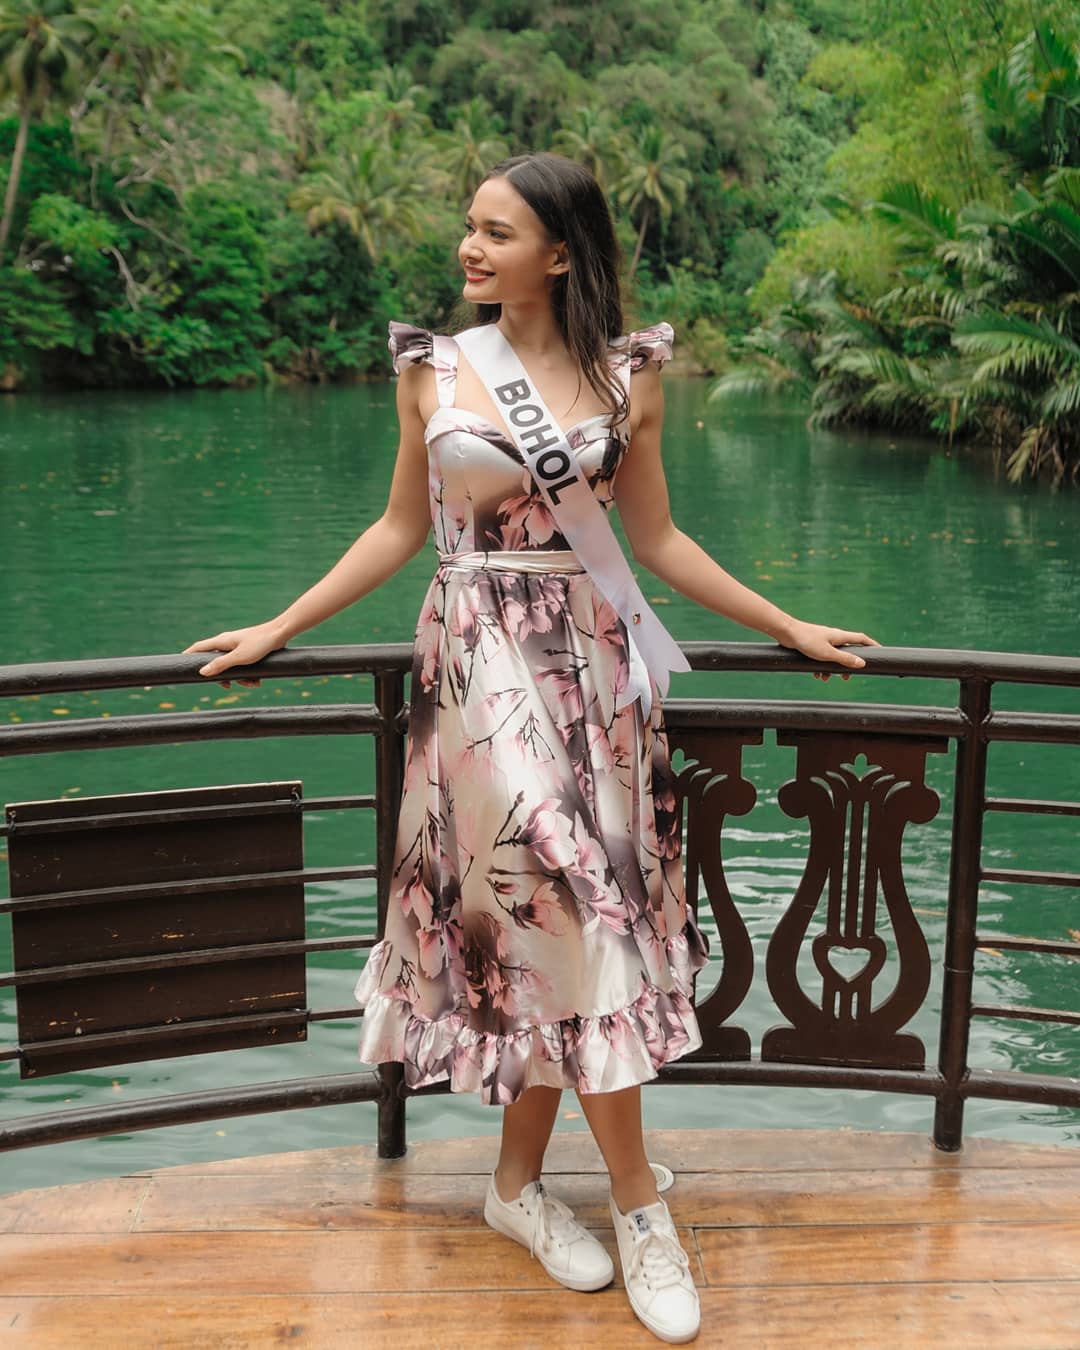 Miss Universe PH names Miss Bohol Amelincx ‘Ambassador for Tourism’